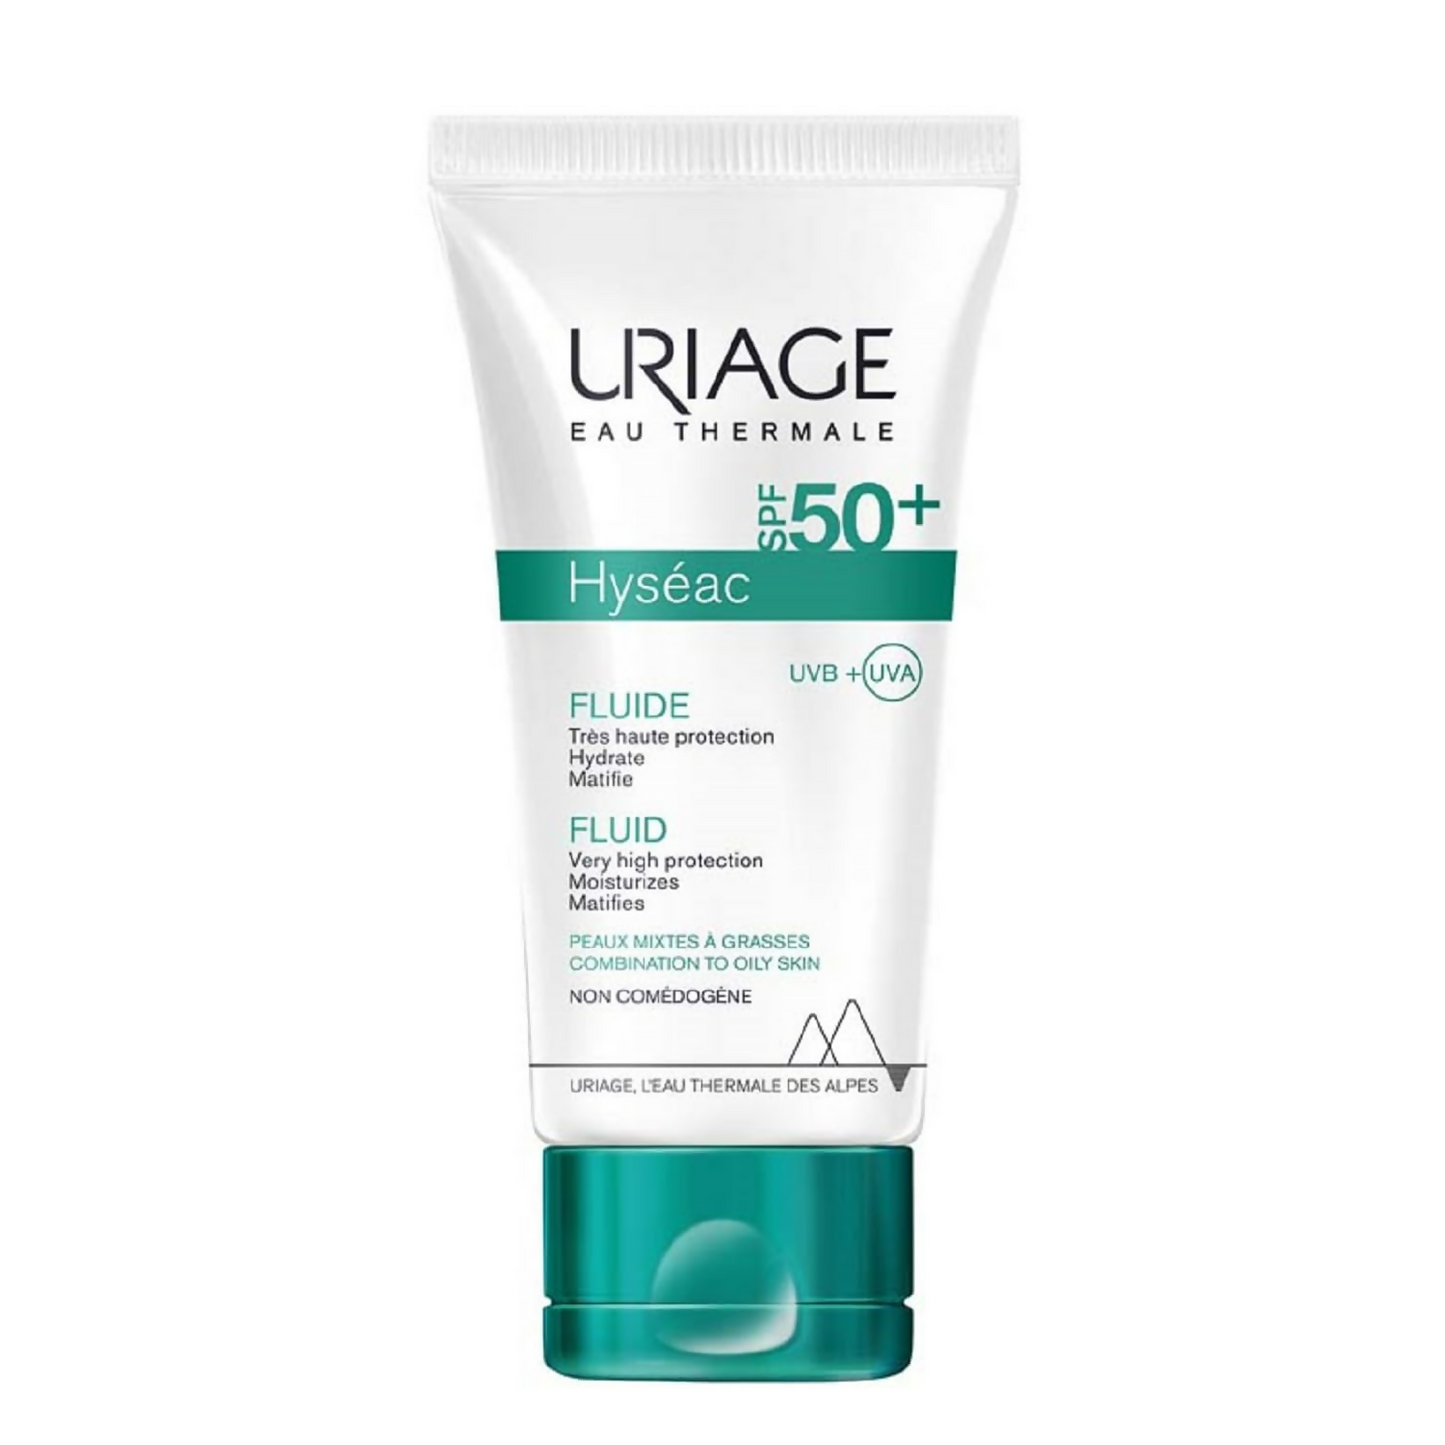 Uriage Hyseac SPF 50+ Fluid